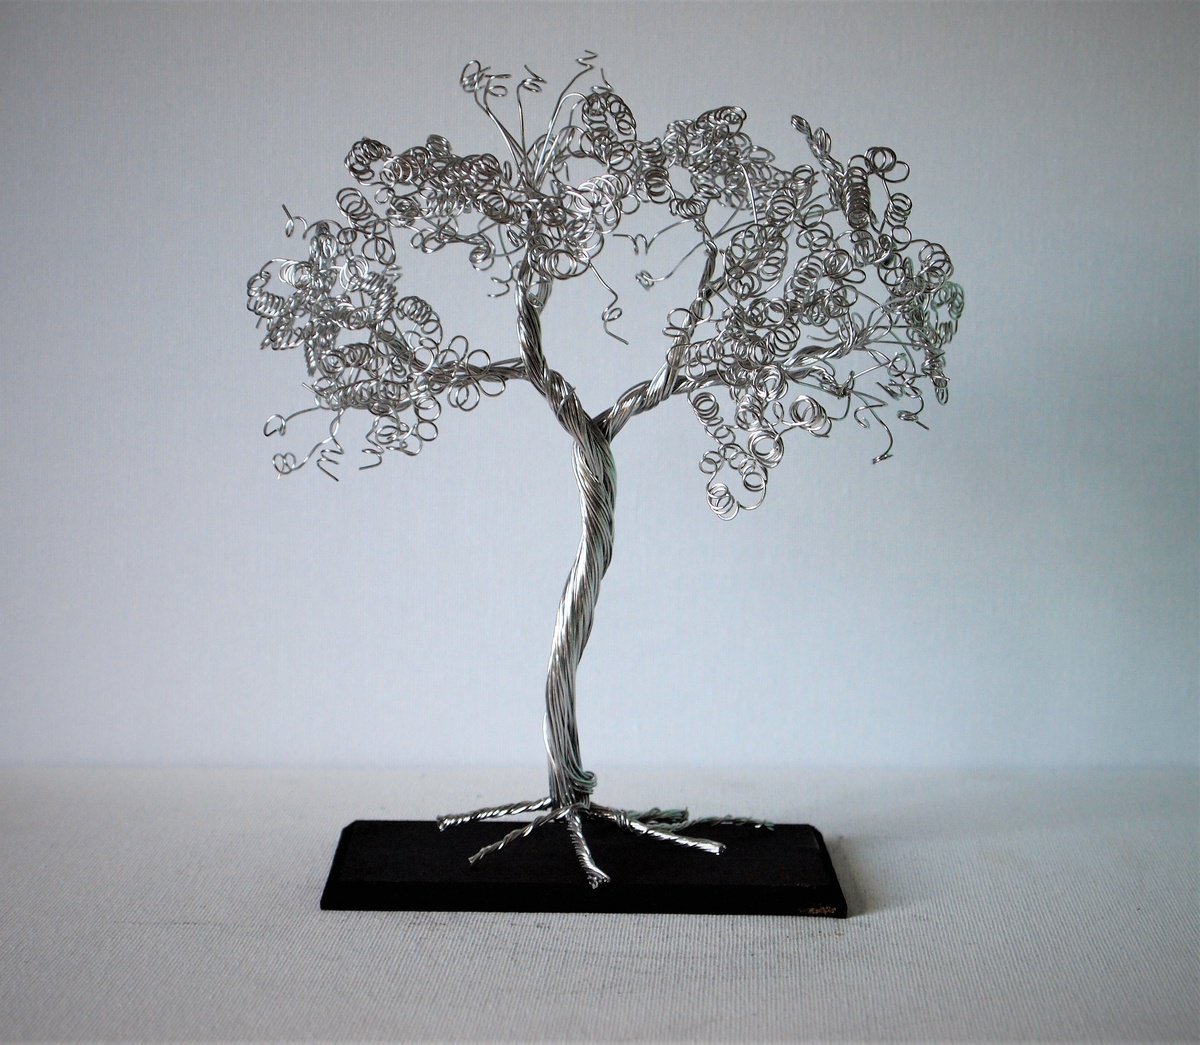 Silver wire tree sculpture, small, delicate 2# by Steph Morgan